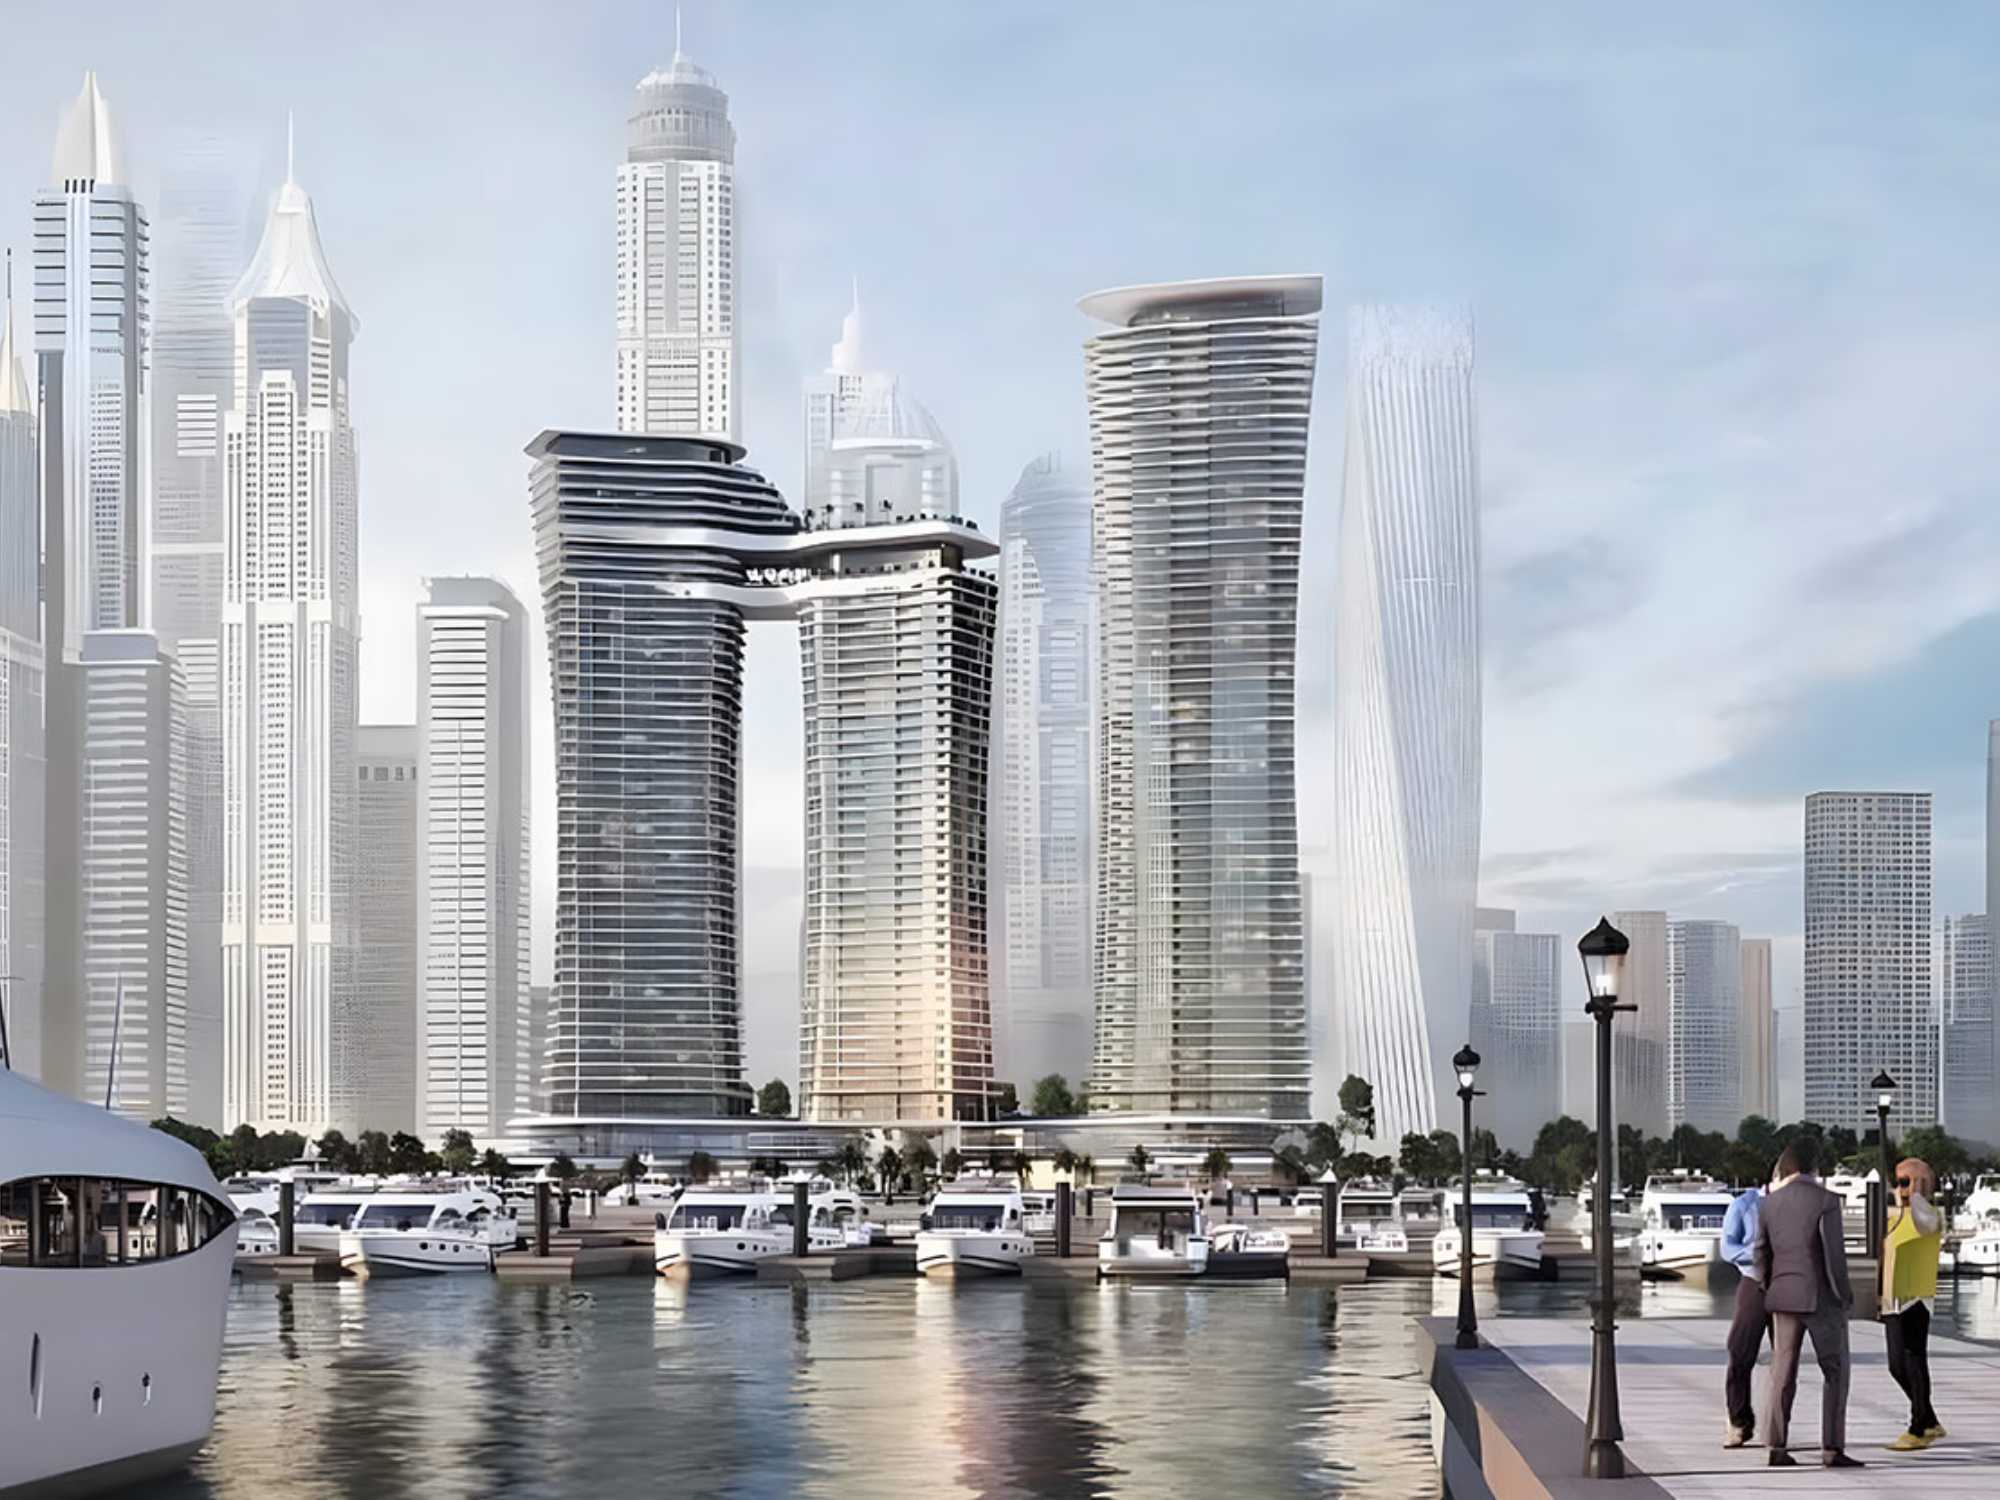 Sobha SeaHaven Tower at Dubai Harbour